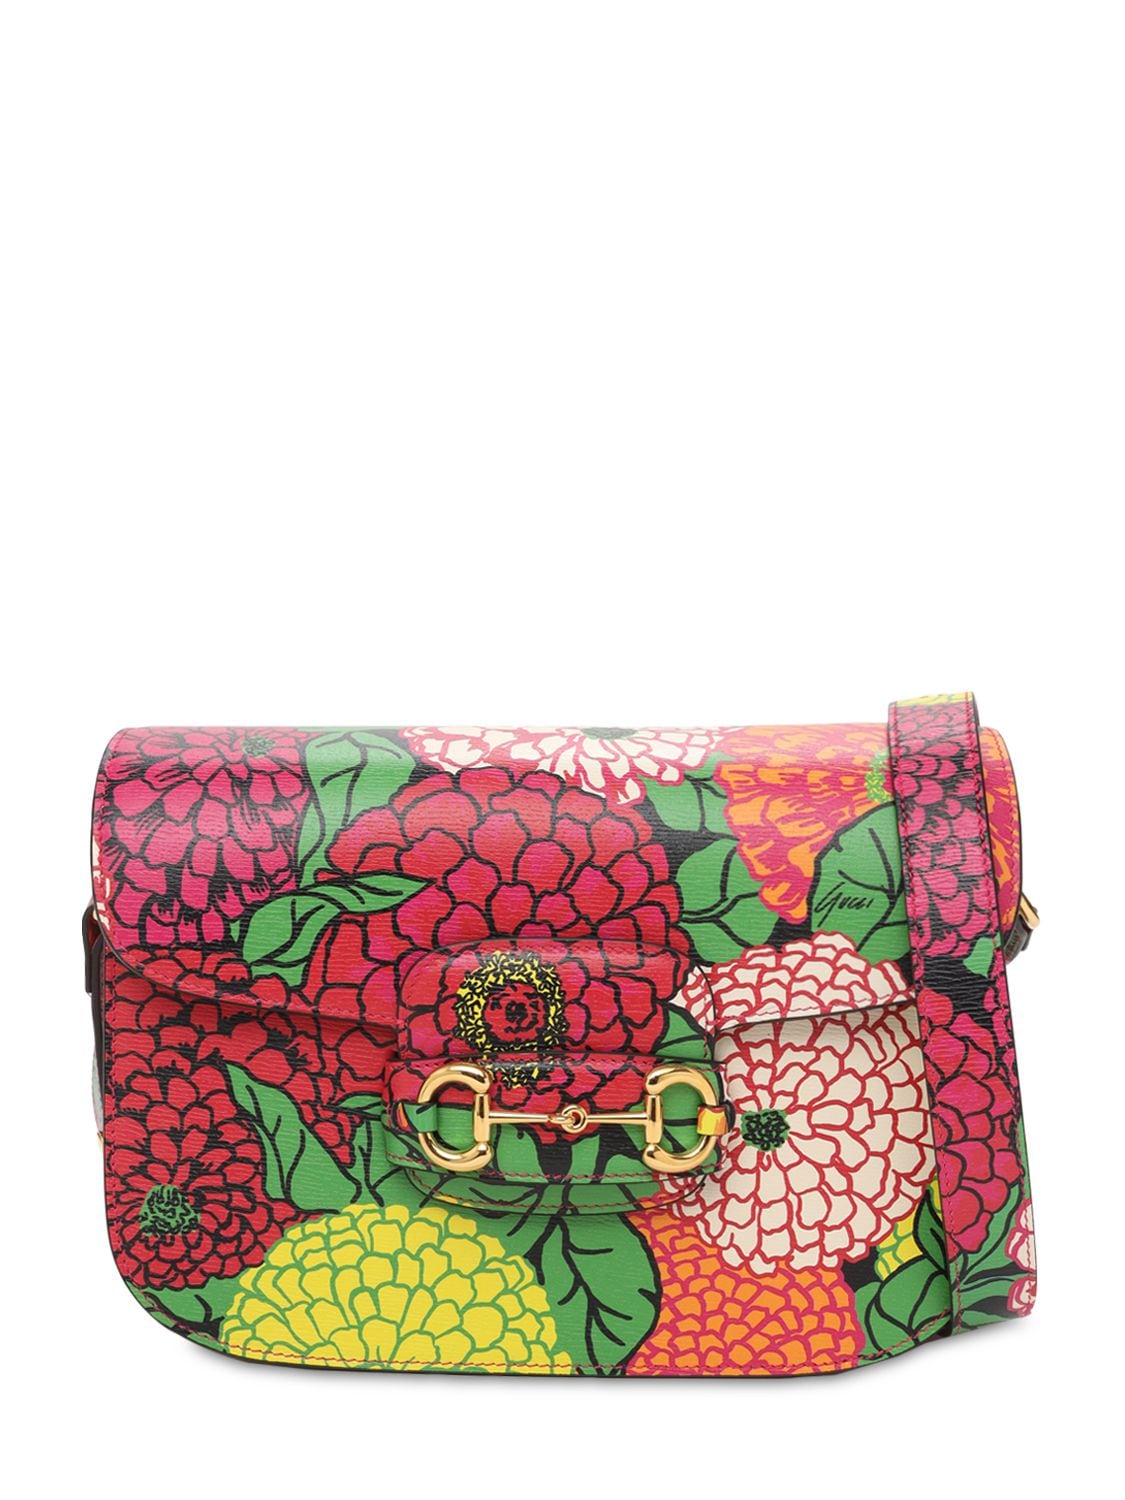 Gucci 1955 Horsebit Pomponica Print Bag In Multicolor